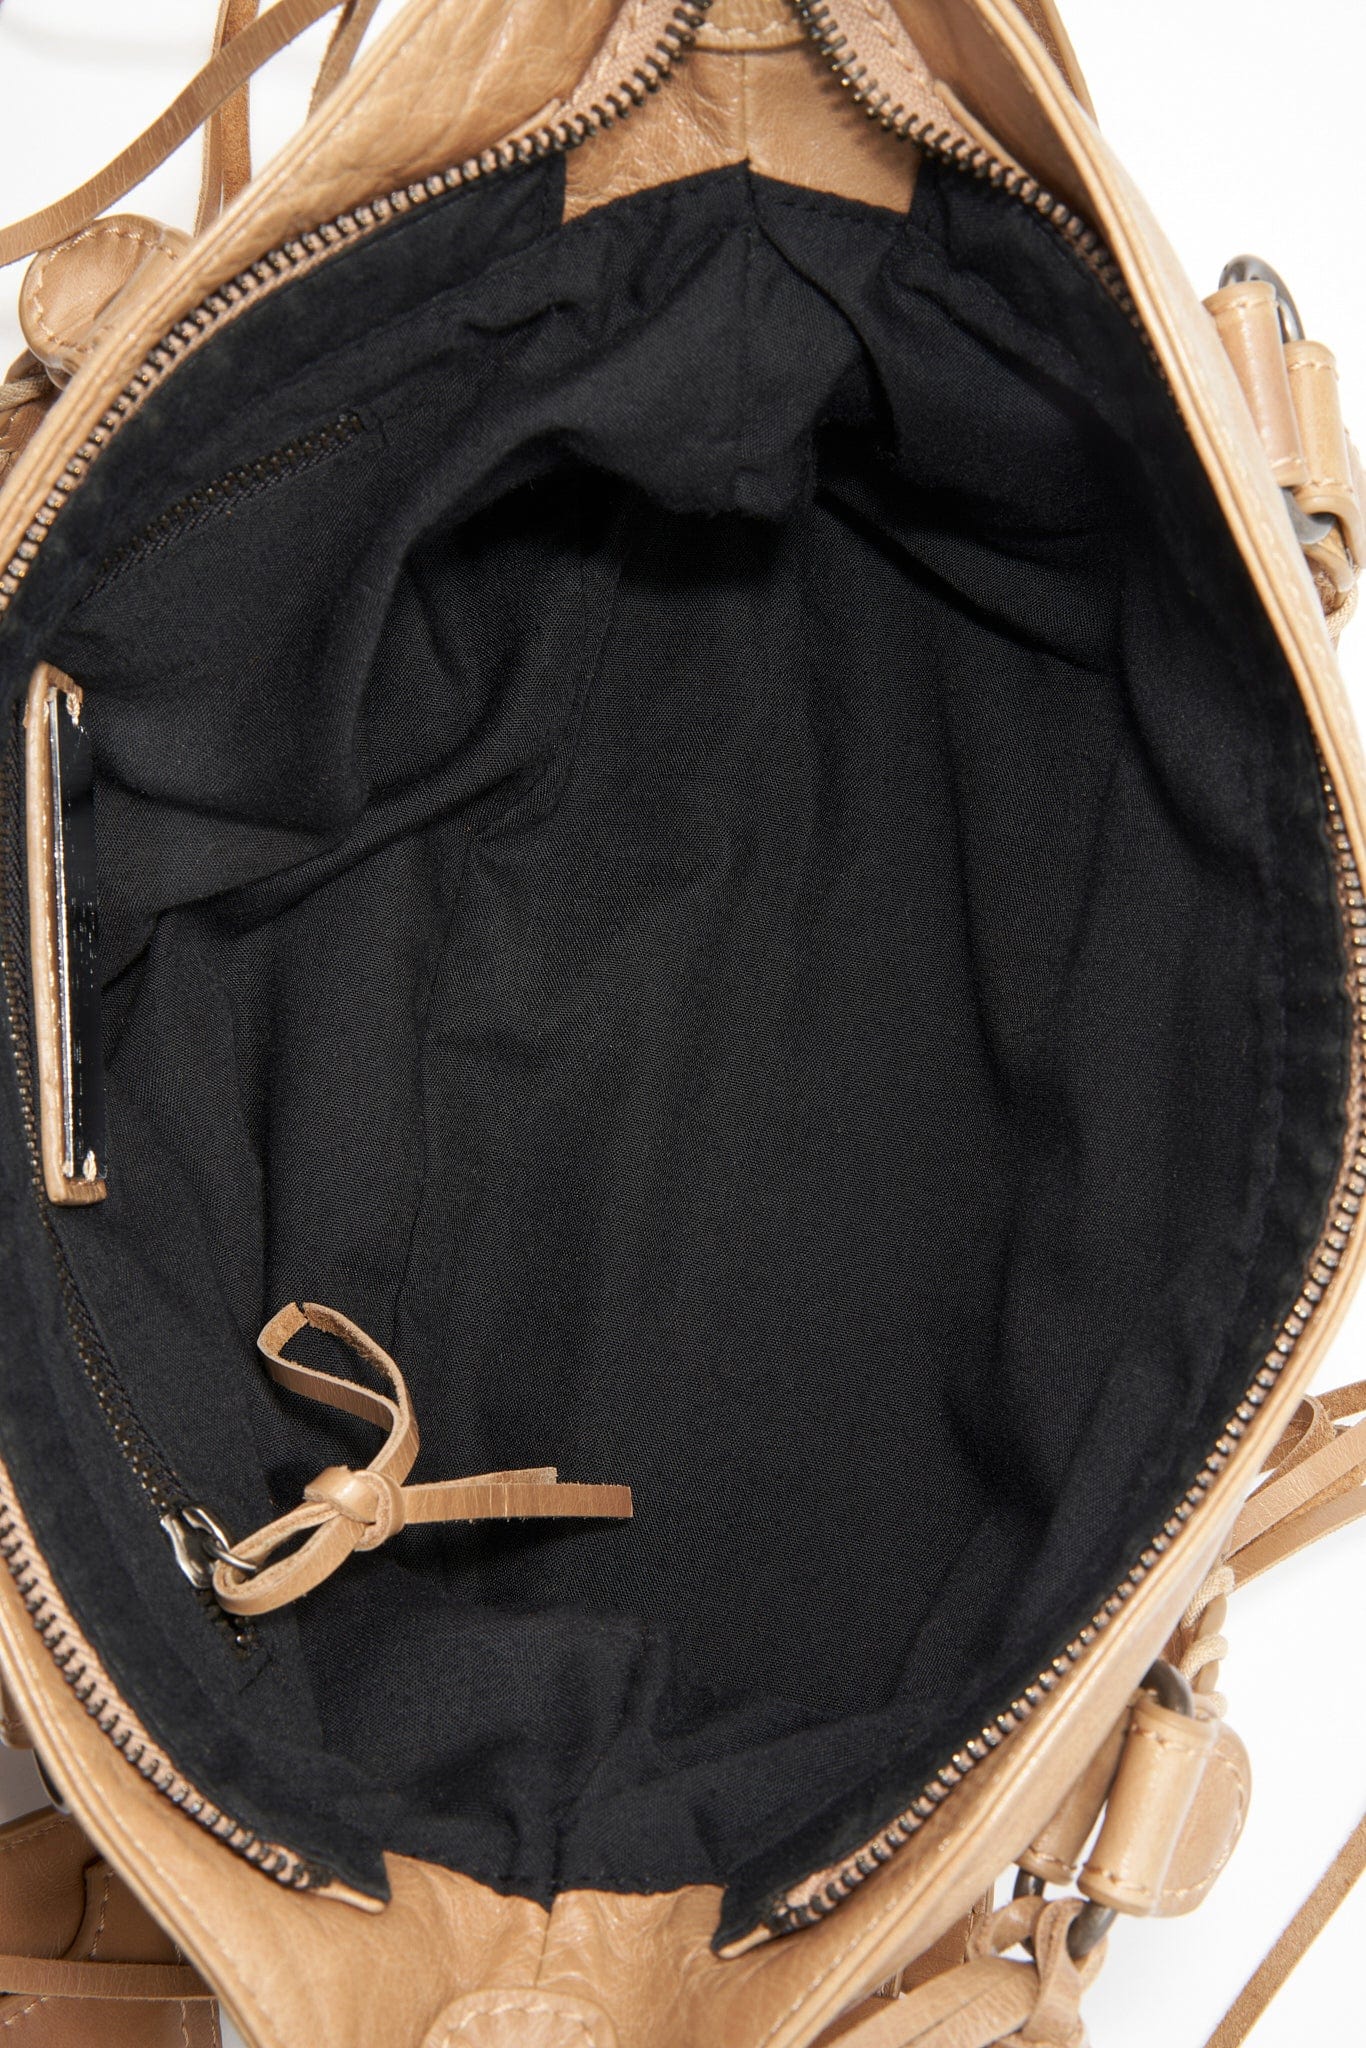 Balenciaga Beige Leather First City Bag